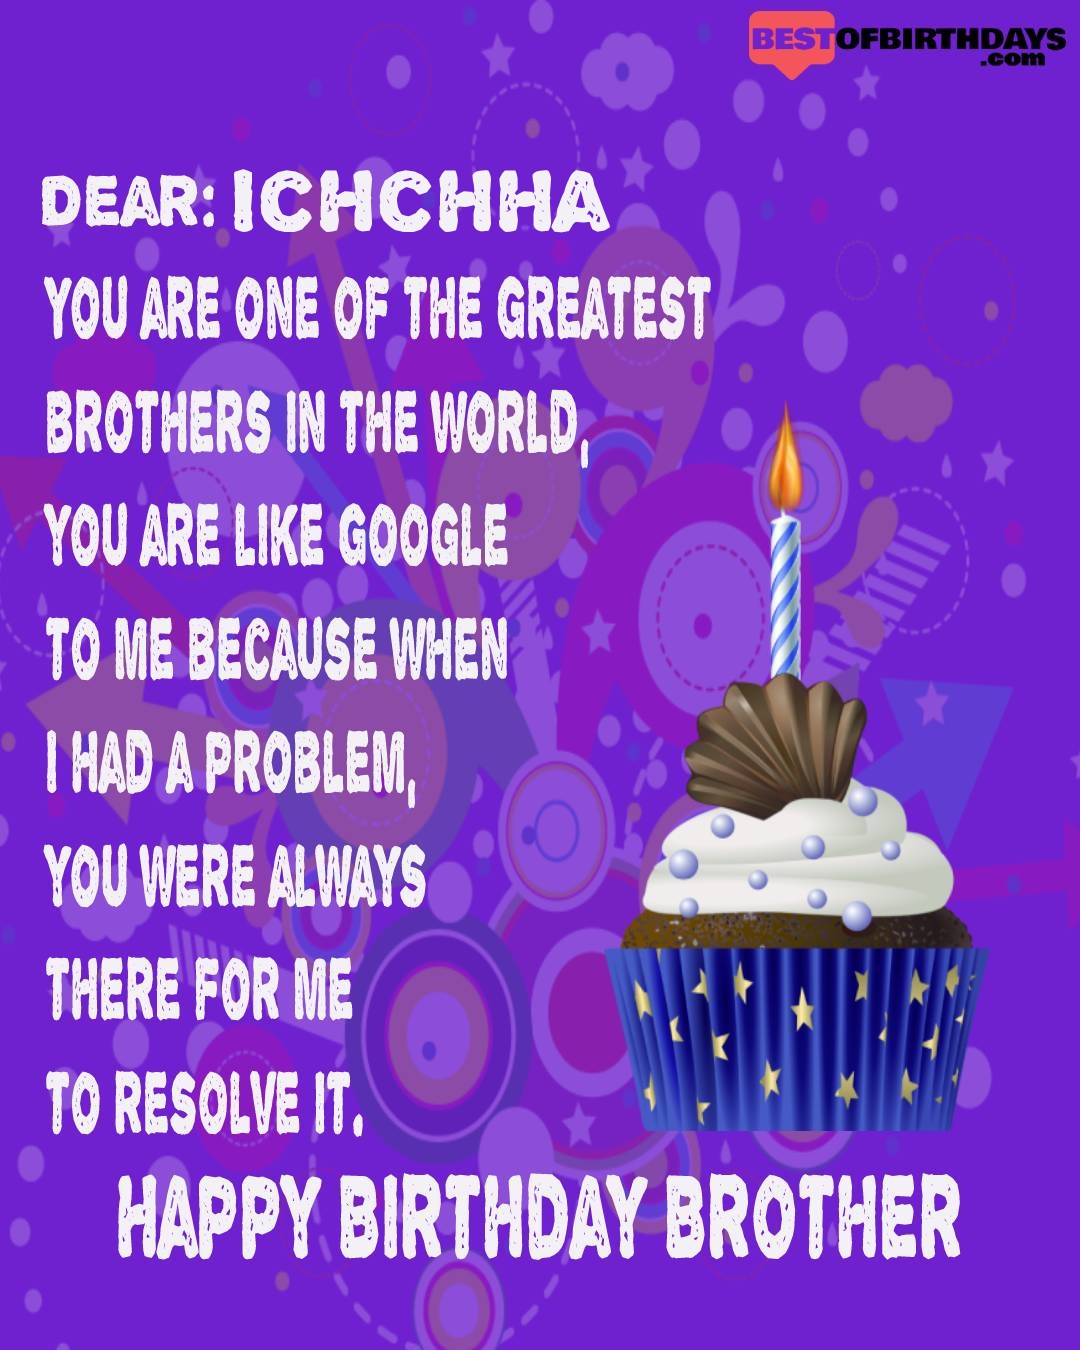 Happy birthday ichchha bhai brother bro